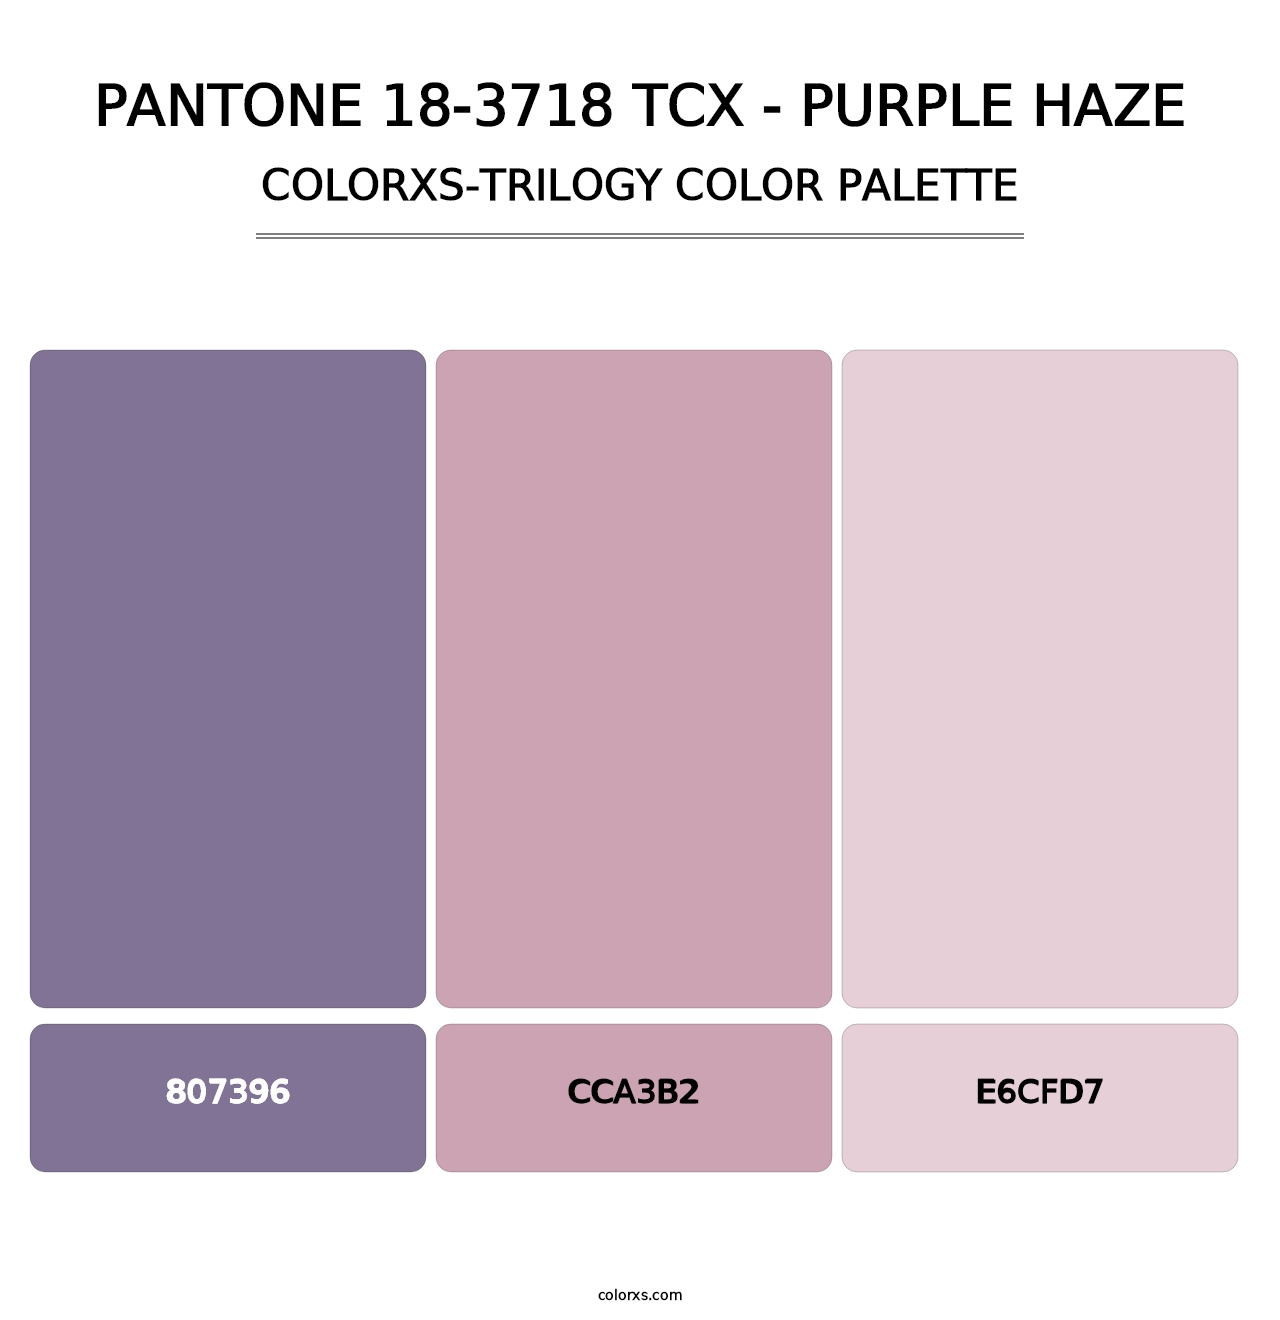 PANTONE 18-3718 TCX - Purple Haze - Colorxs Trilogy Palette